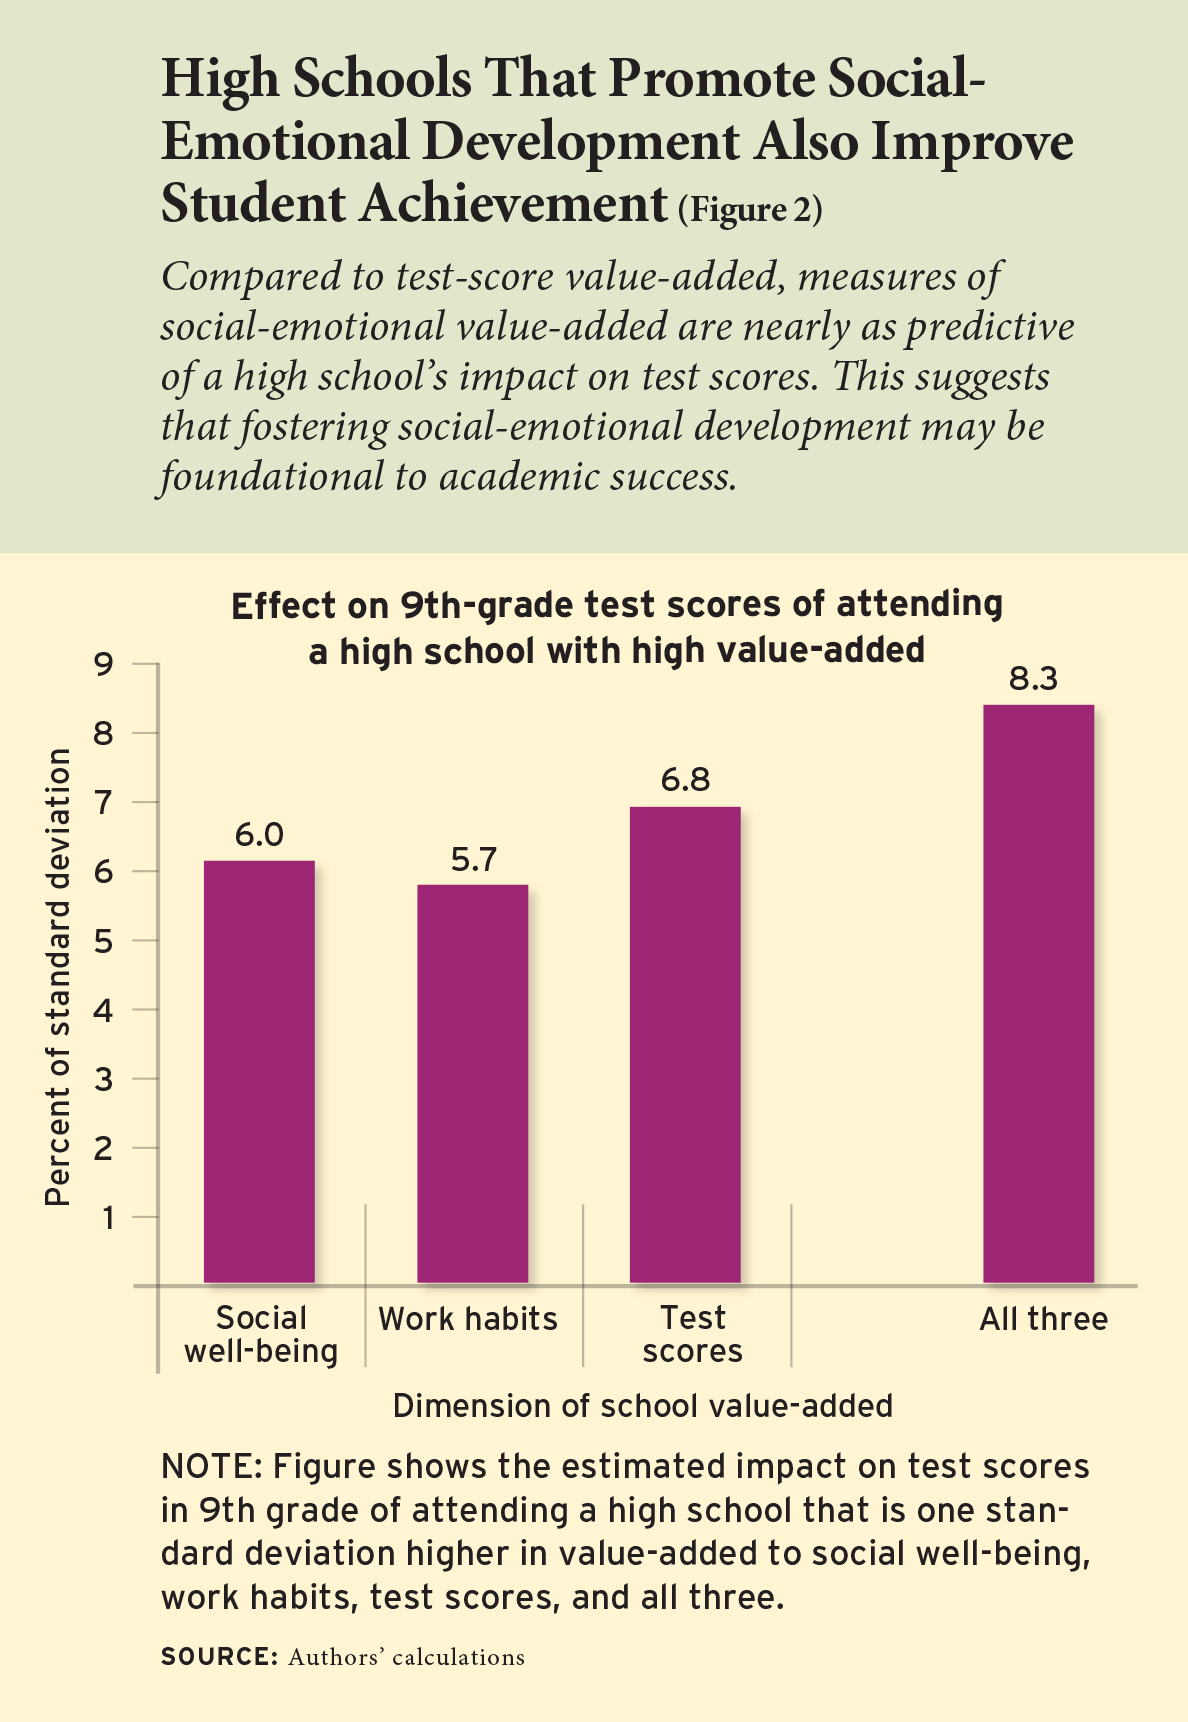 Figure 2: High Schools That Promote Social- Emotional Development Also Improve Student Achievement